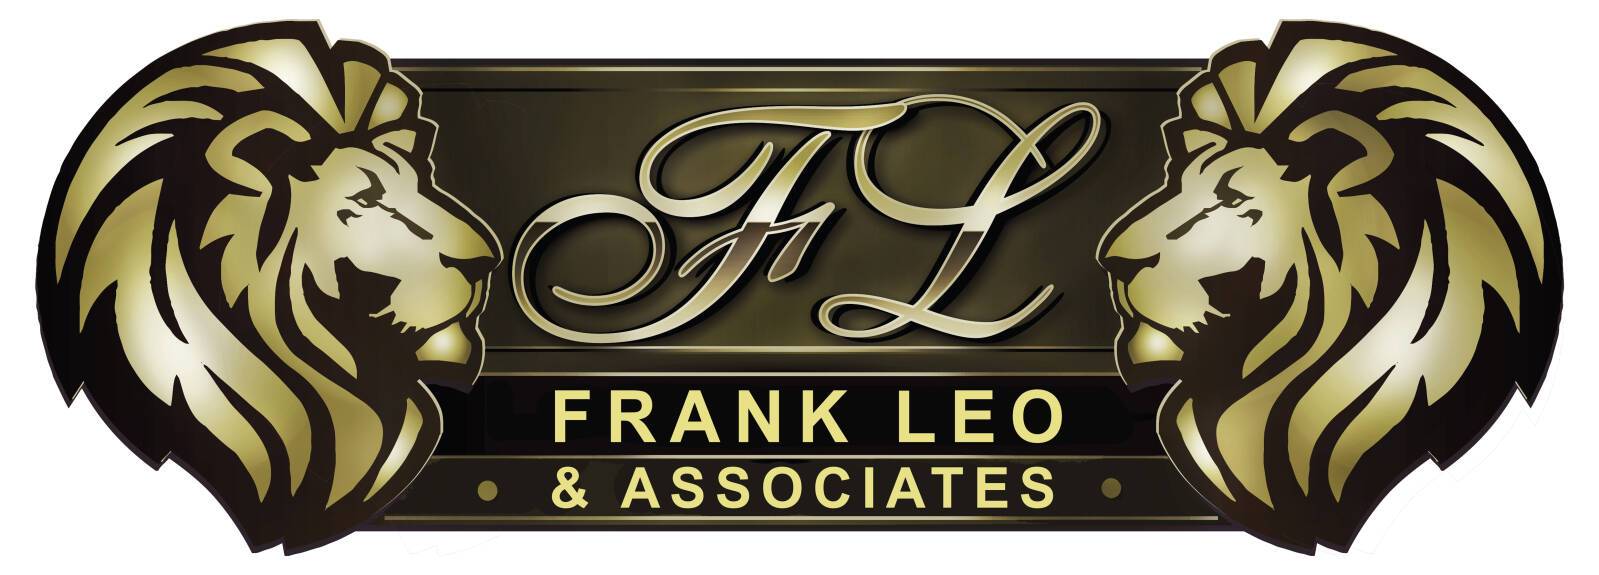 Frank Leo & Associates